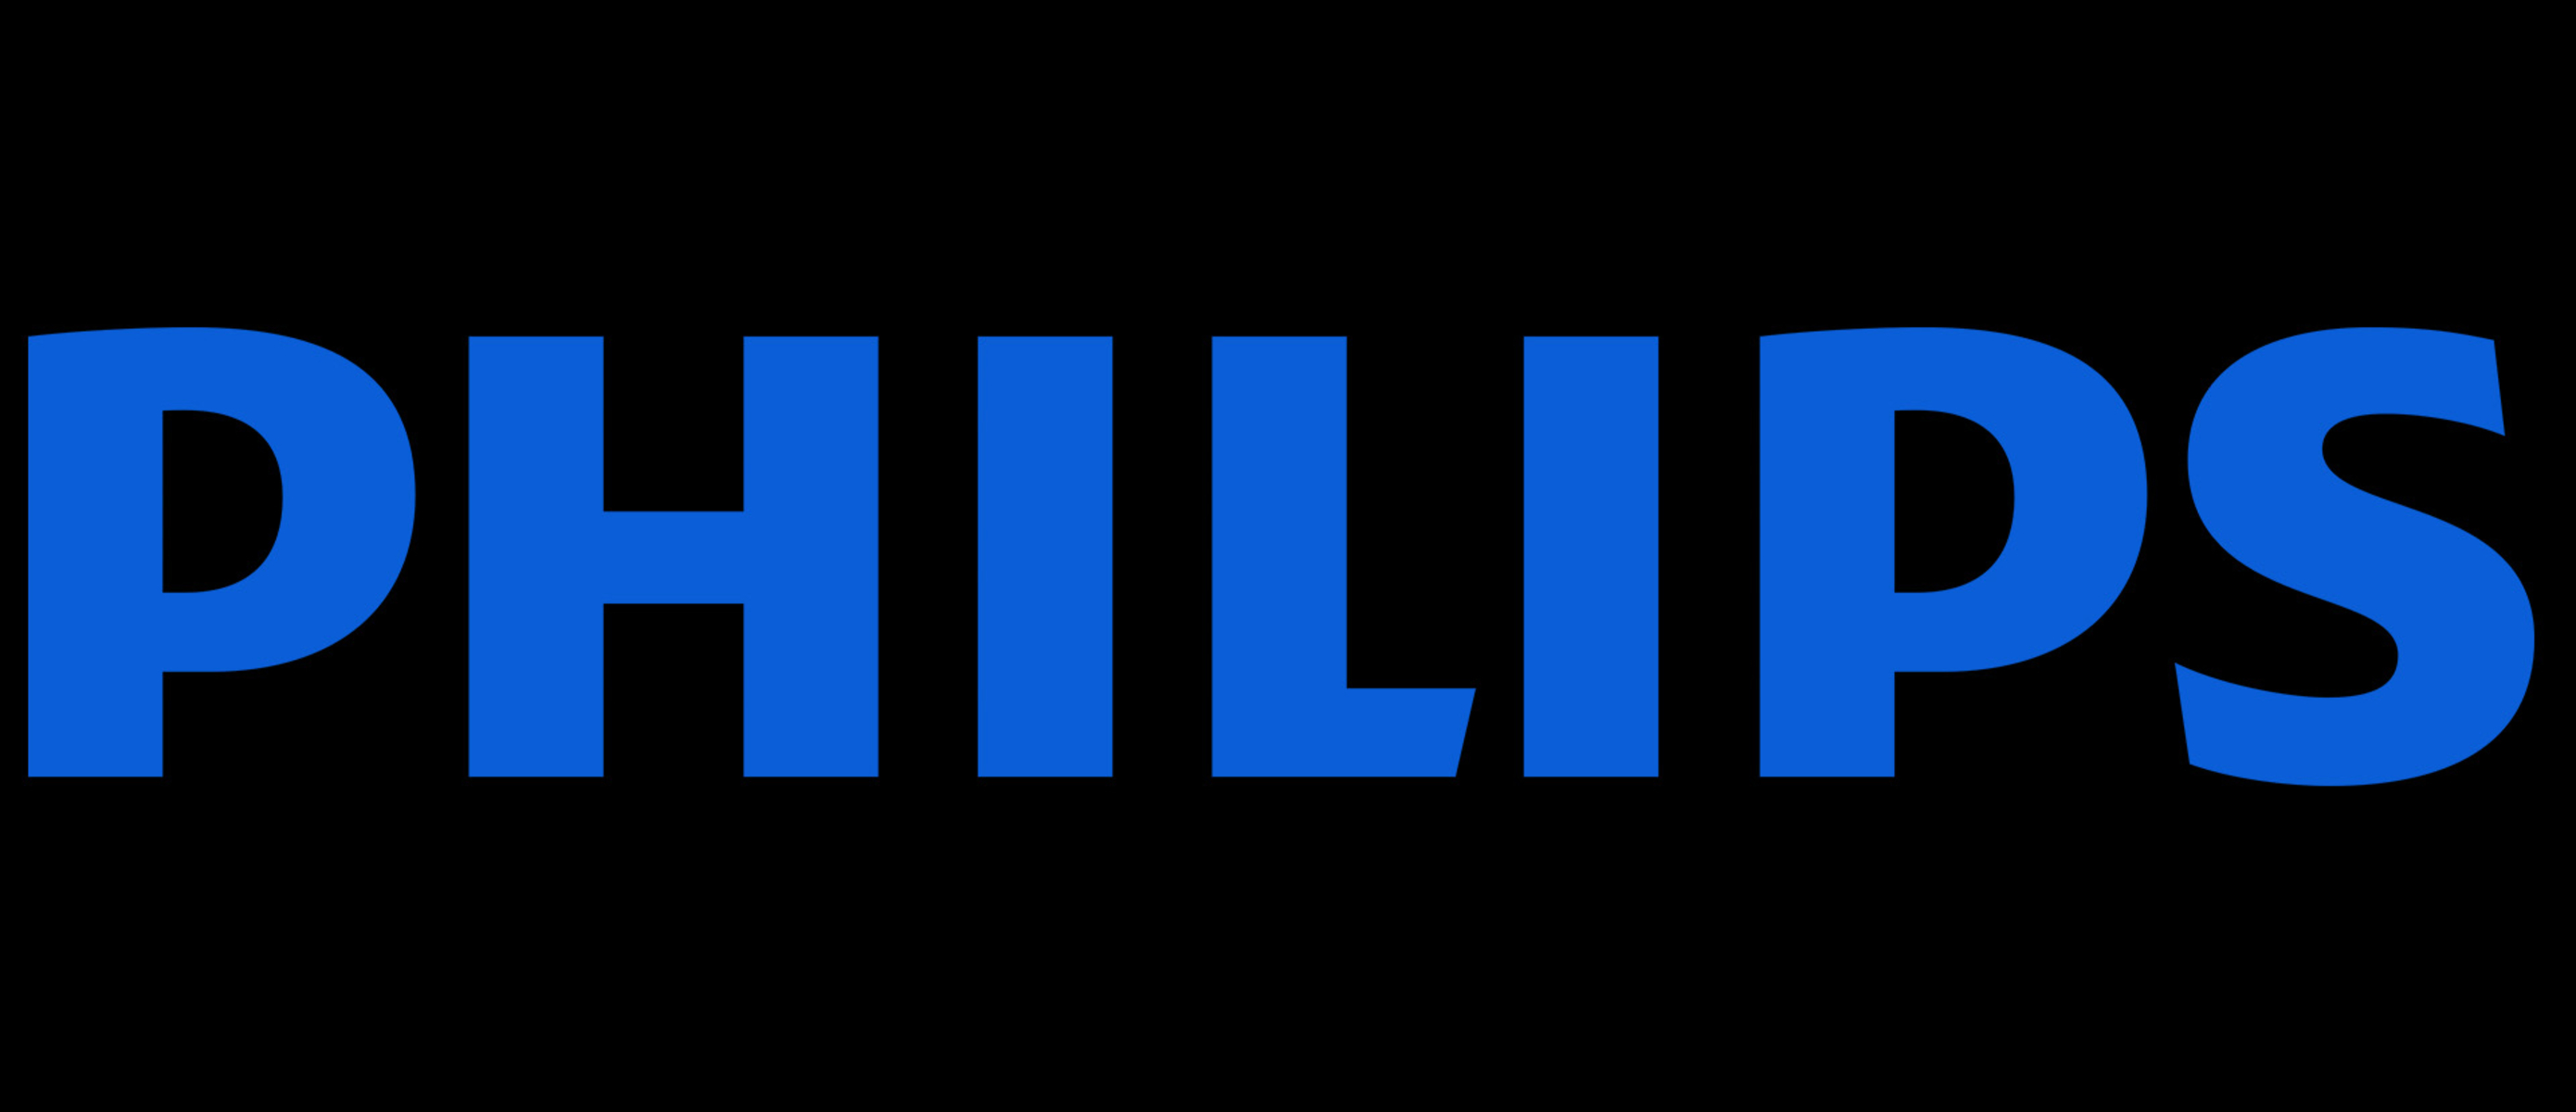 Бренд филипс. Филипс надпись. Philips бренд. Компания Филипс логотип. Заставка Филипс.